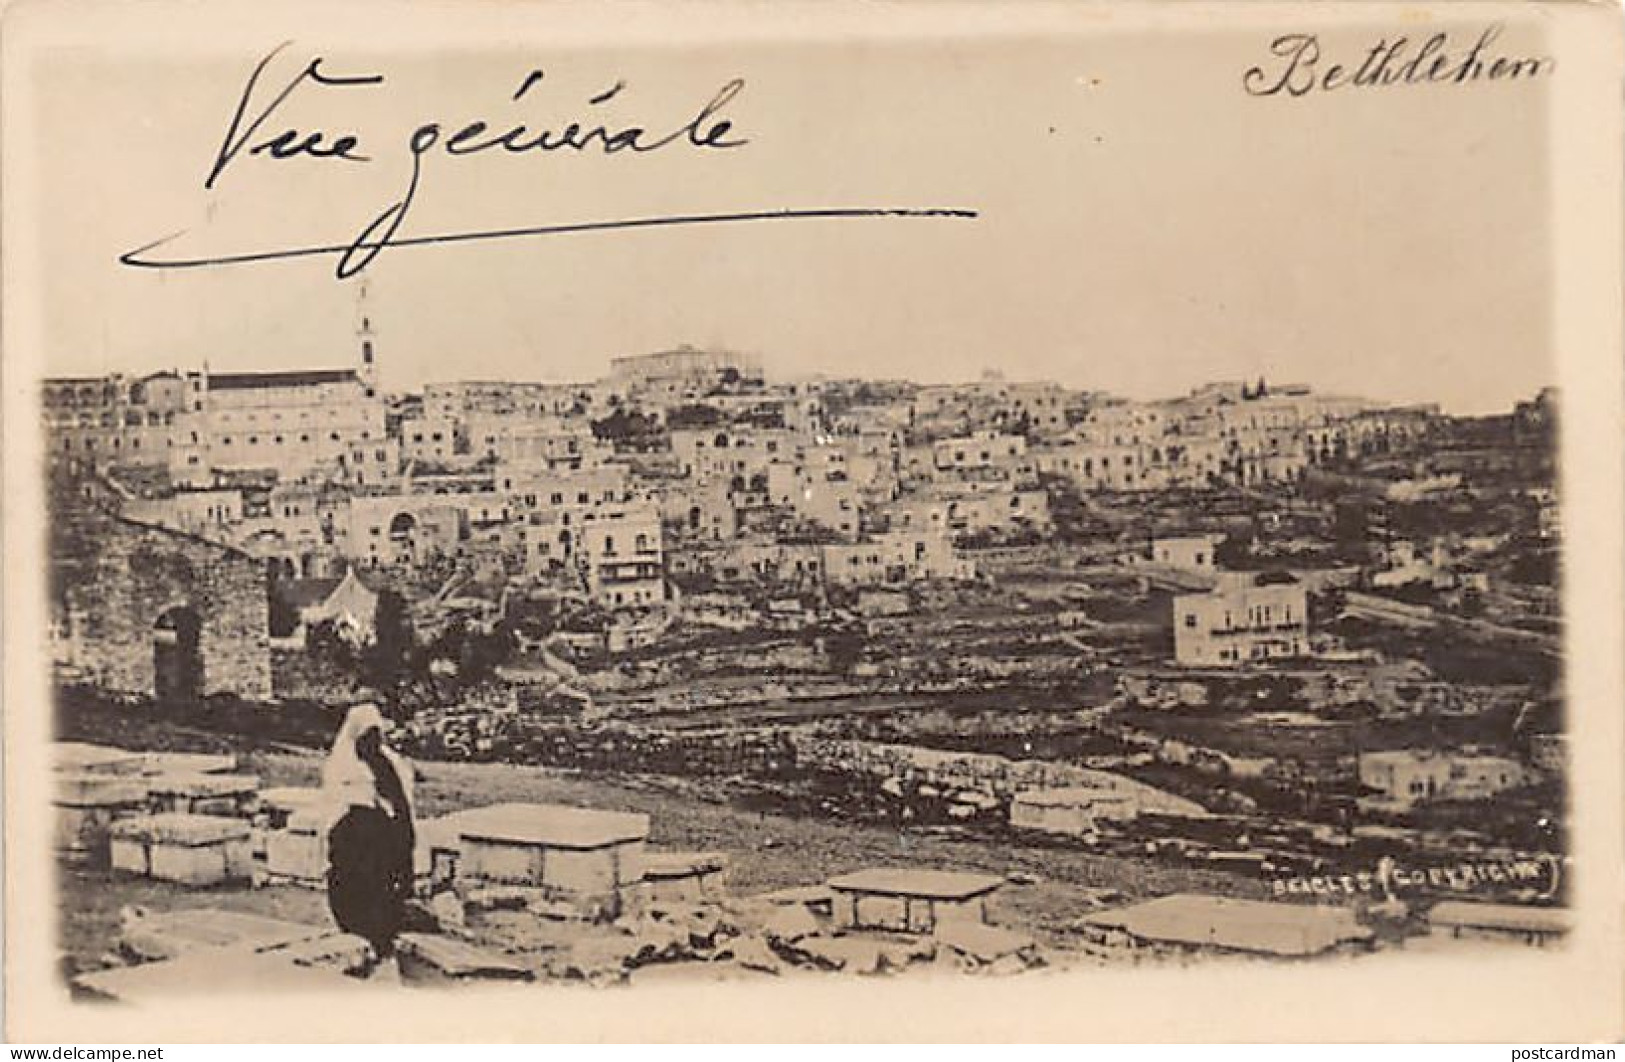 Israel - BETHLEHEM - General View - REAL PHOTO - Publ. Beagles  - Israel